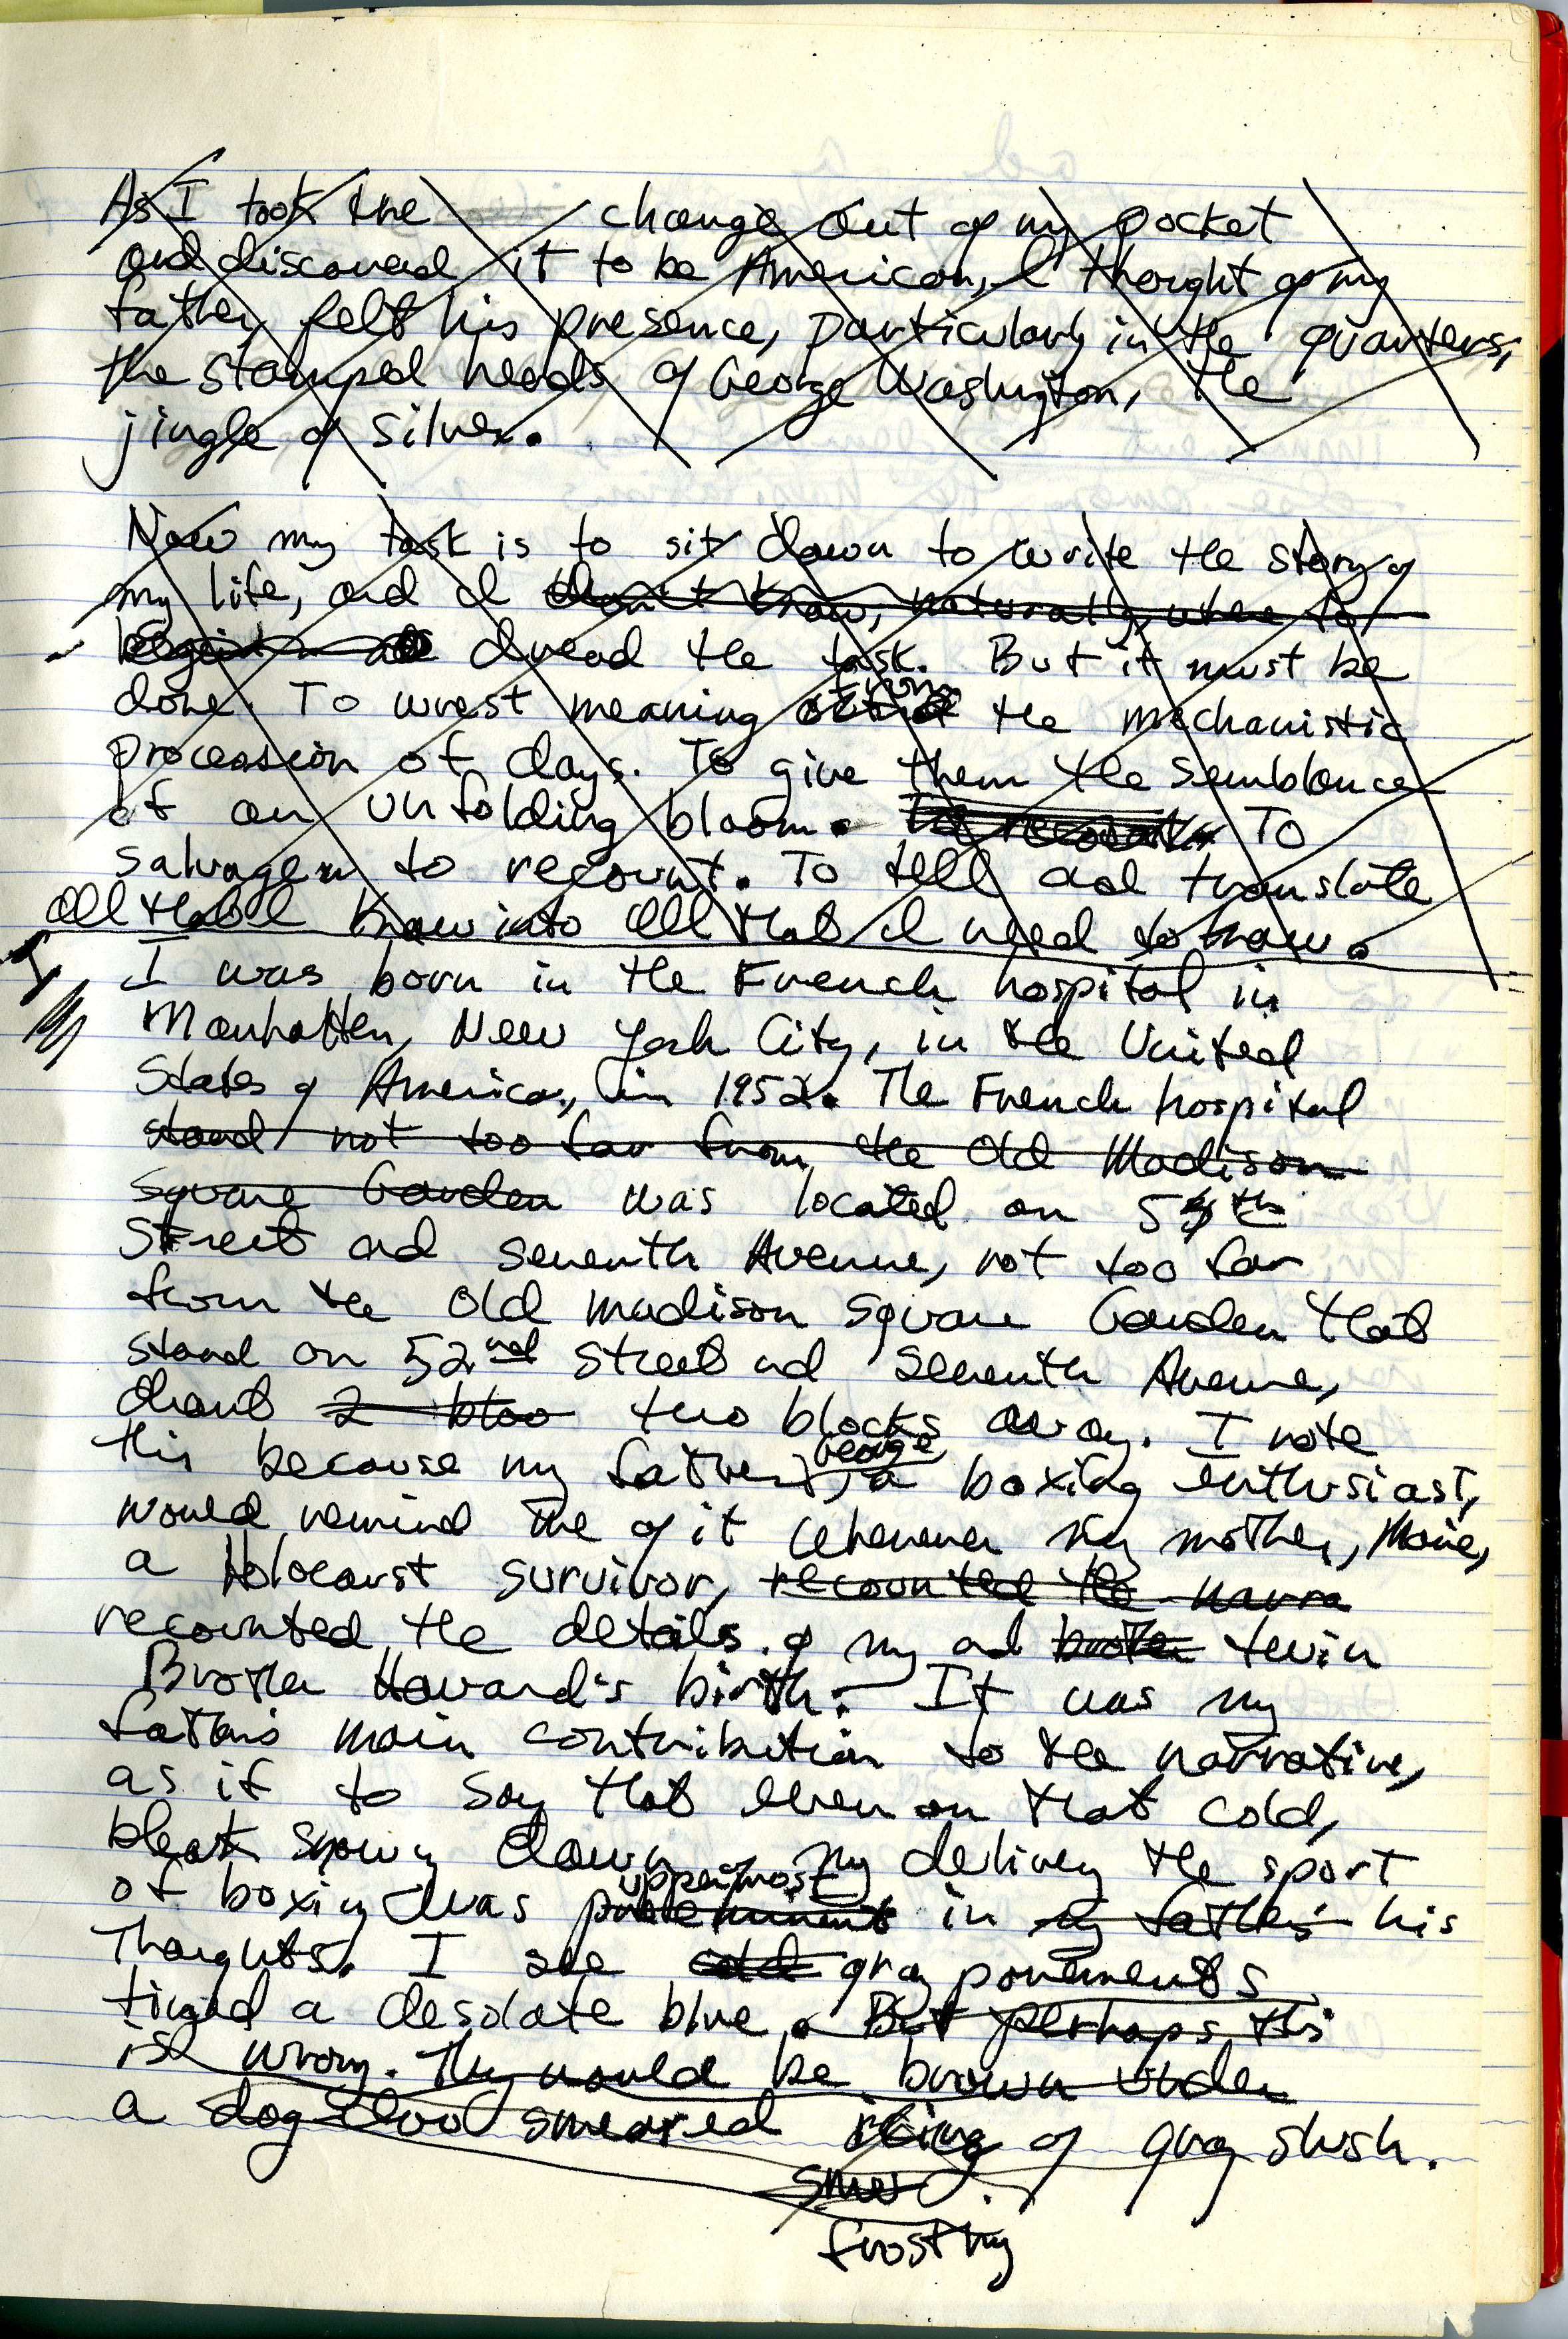 Kaufman, Alan. Jew Boy. Manuscript notebook, volume 1, undated, from the Alan Kaufman papers